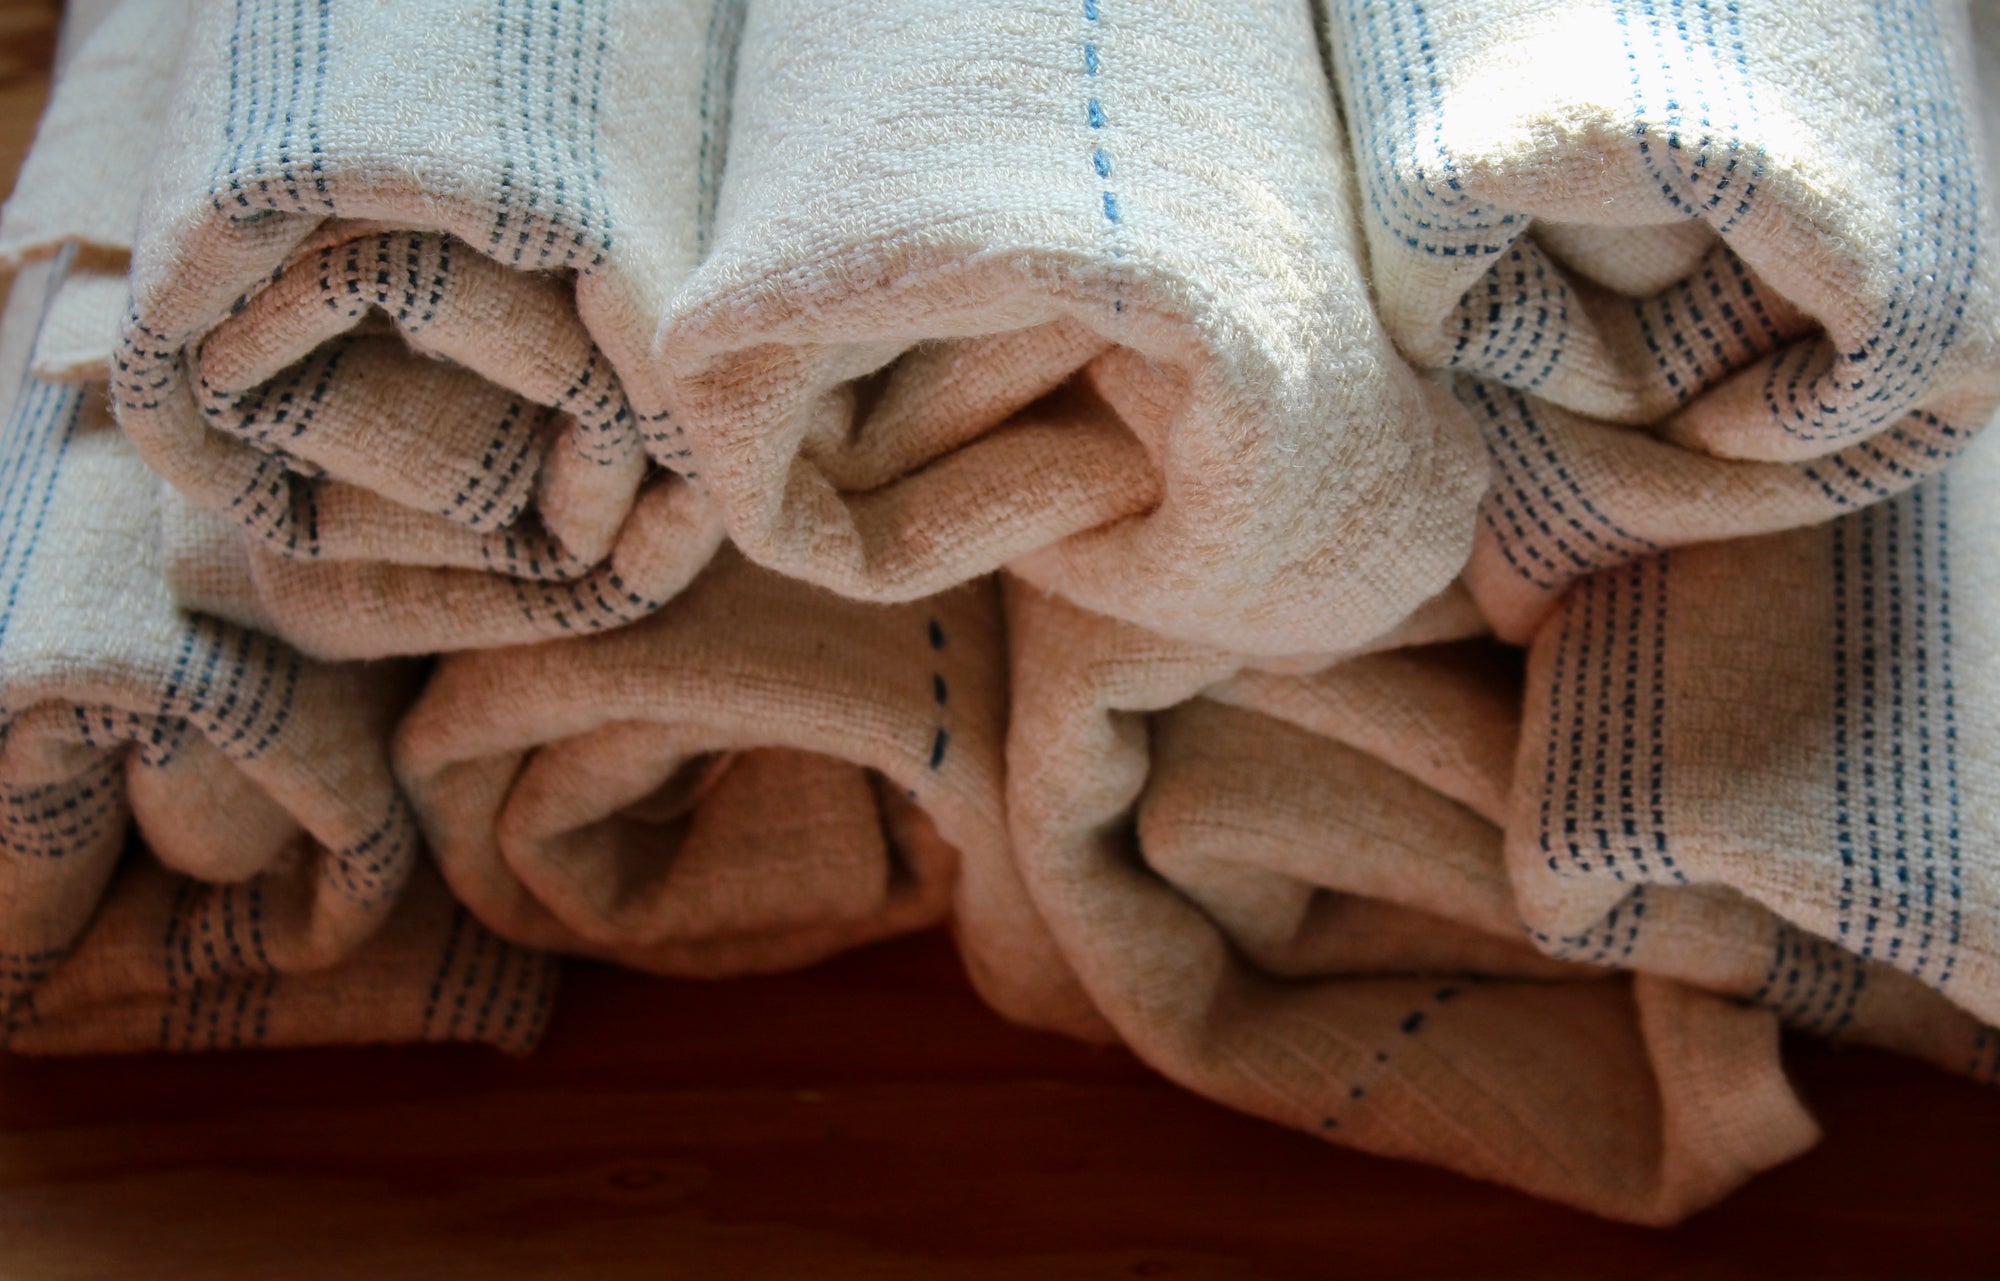 Demi-Damask Kitchen Towels (By Megan Samms)